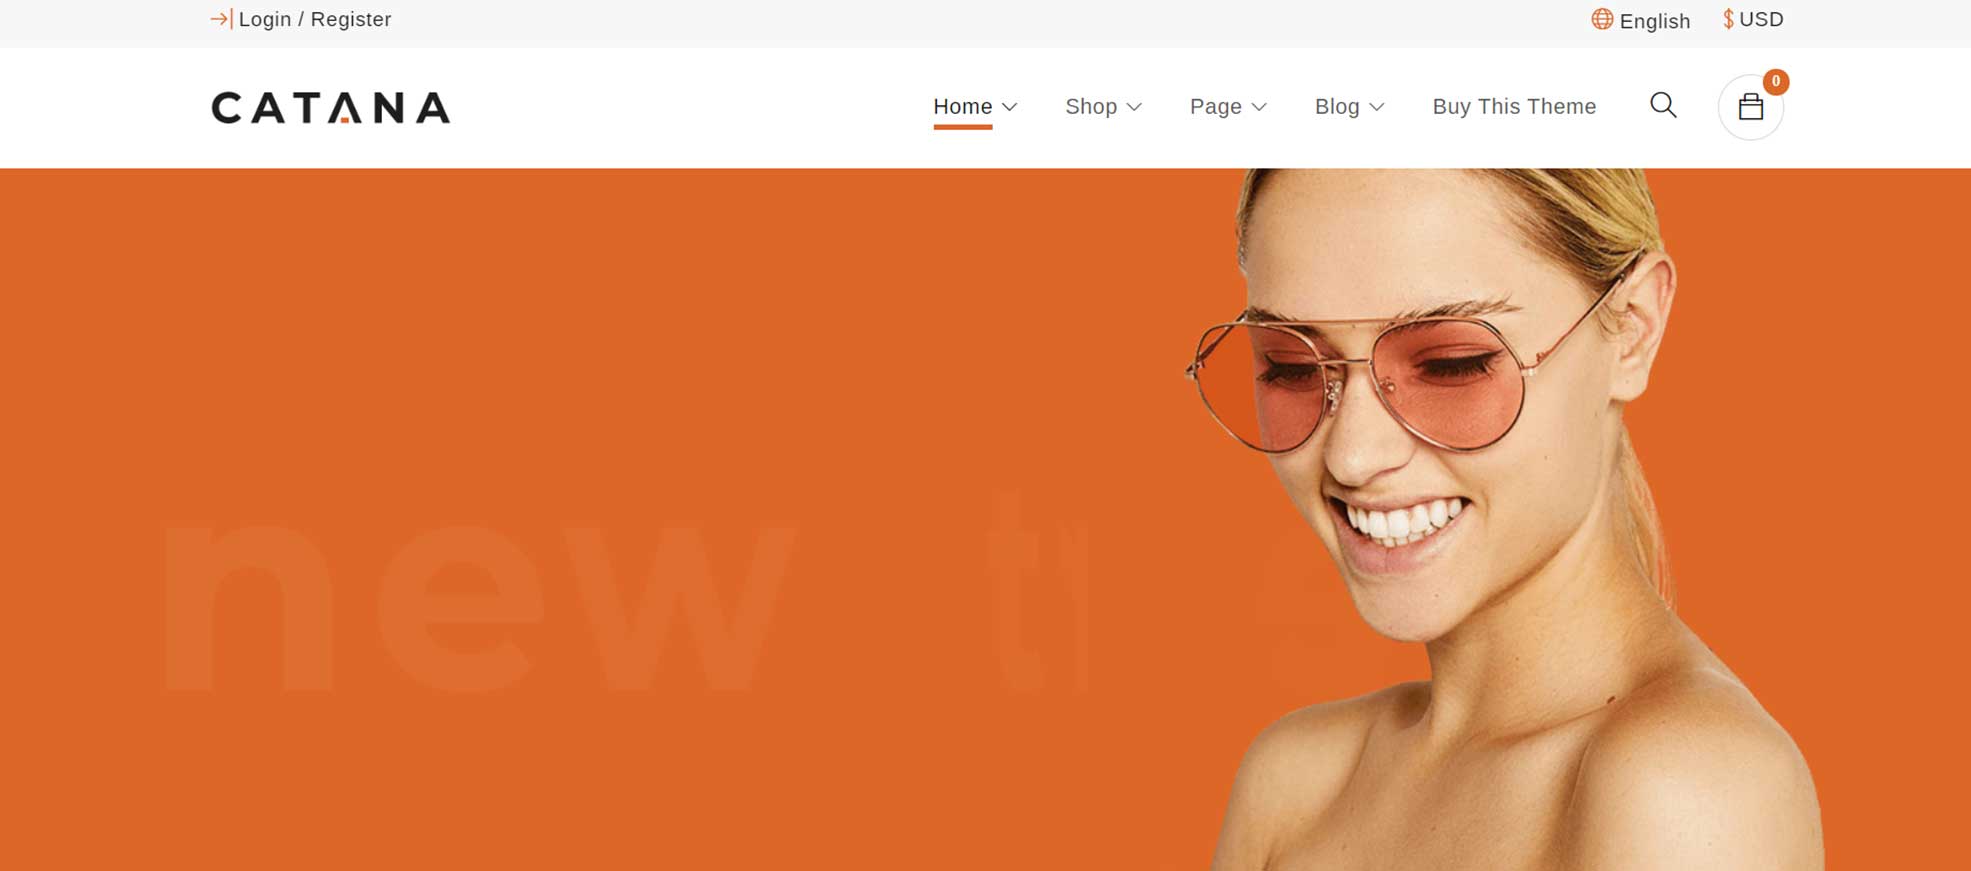 Catana – Fashion & Minimal WooCommerce WordPress Theme